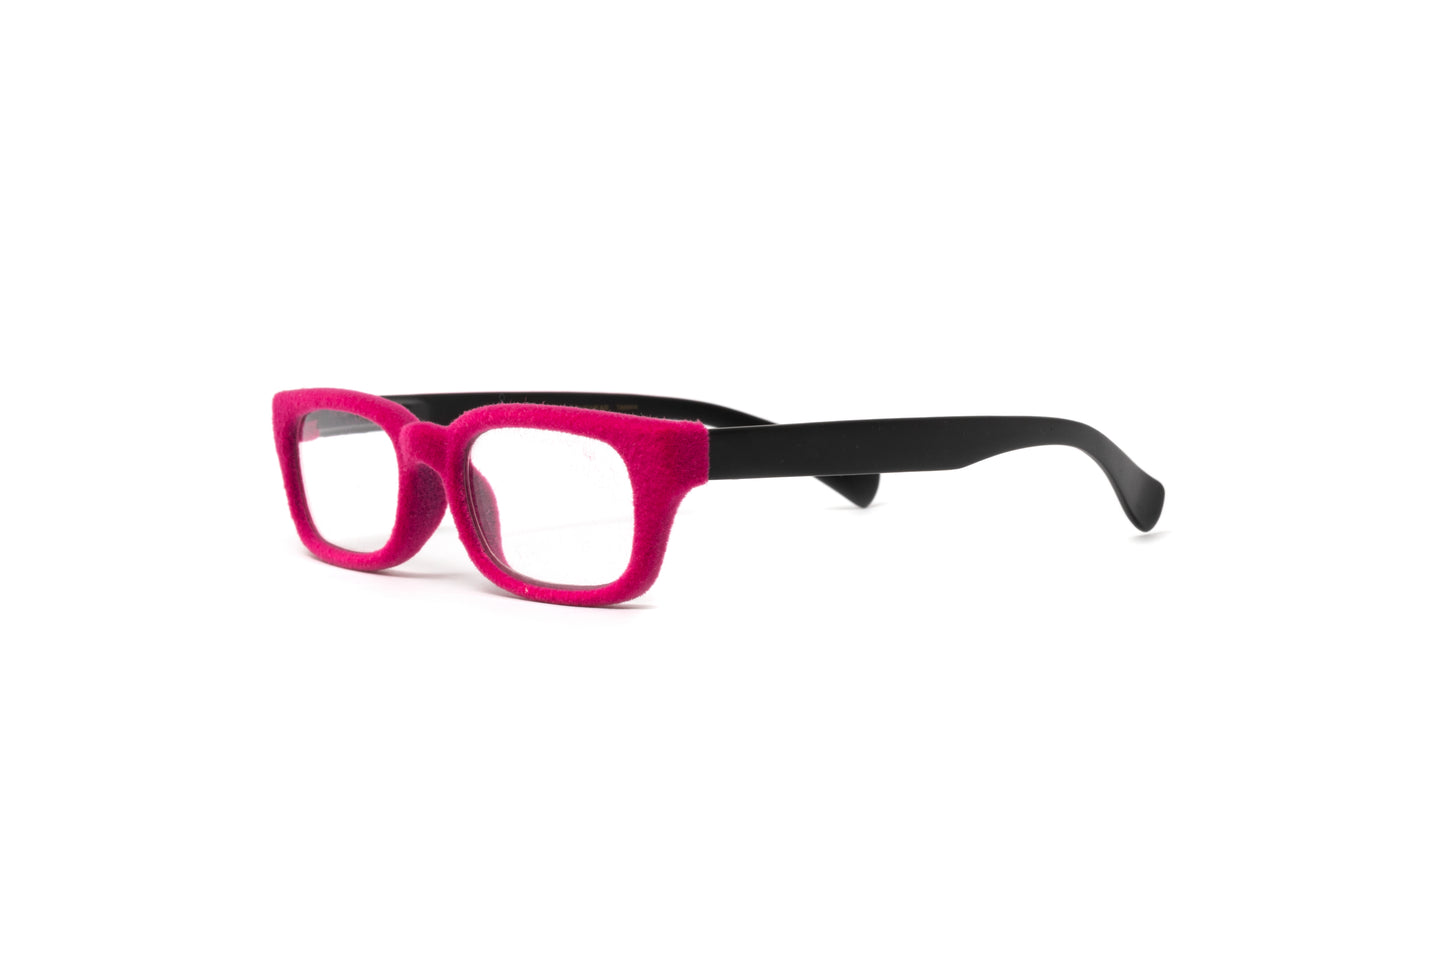 Pink velvet rimmed rectangular reading glasses with matte black temples by Eyejets